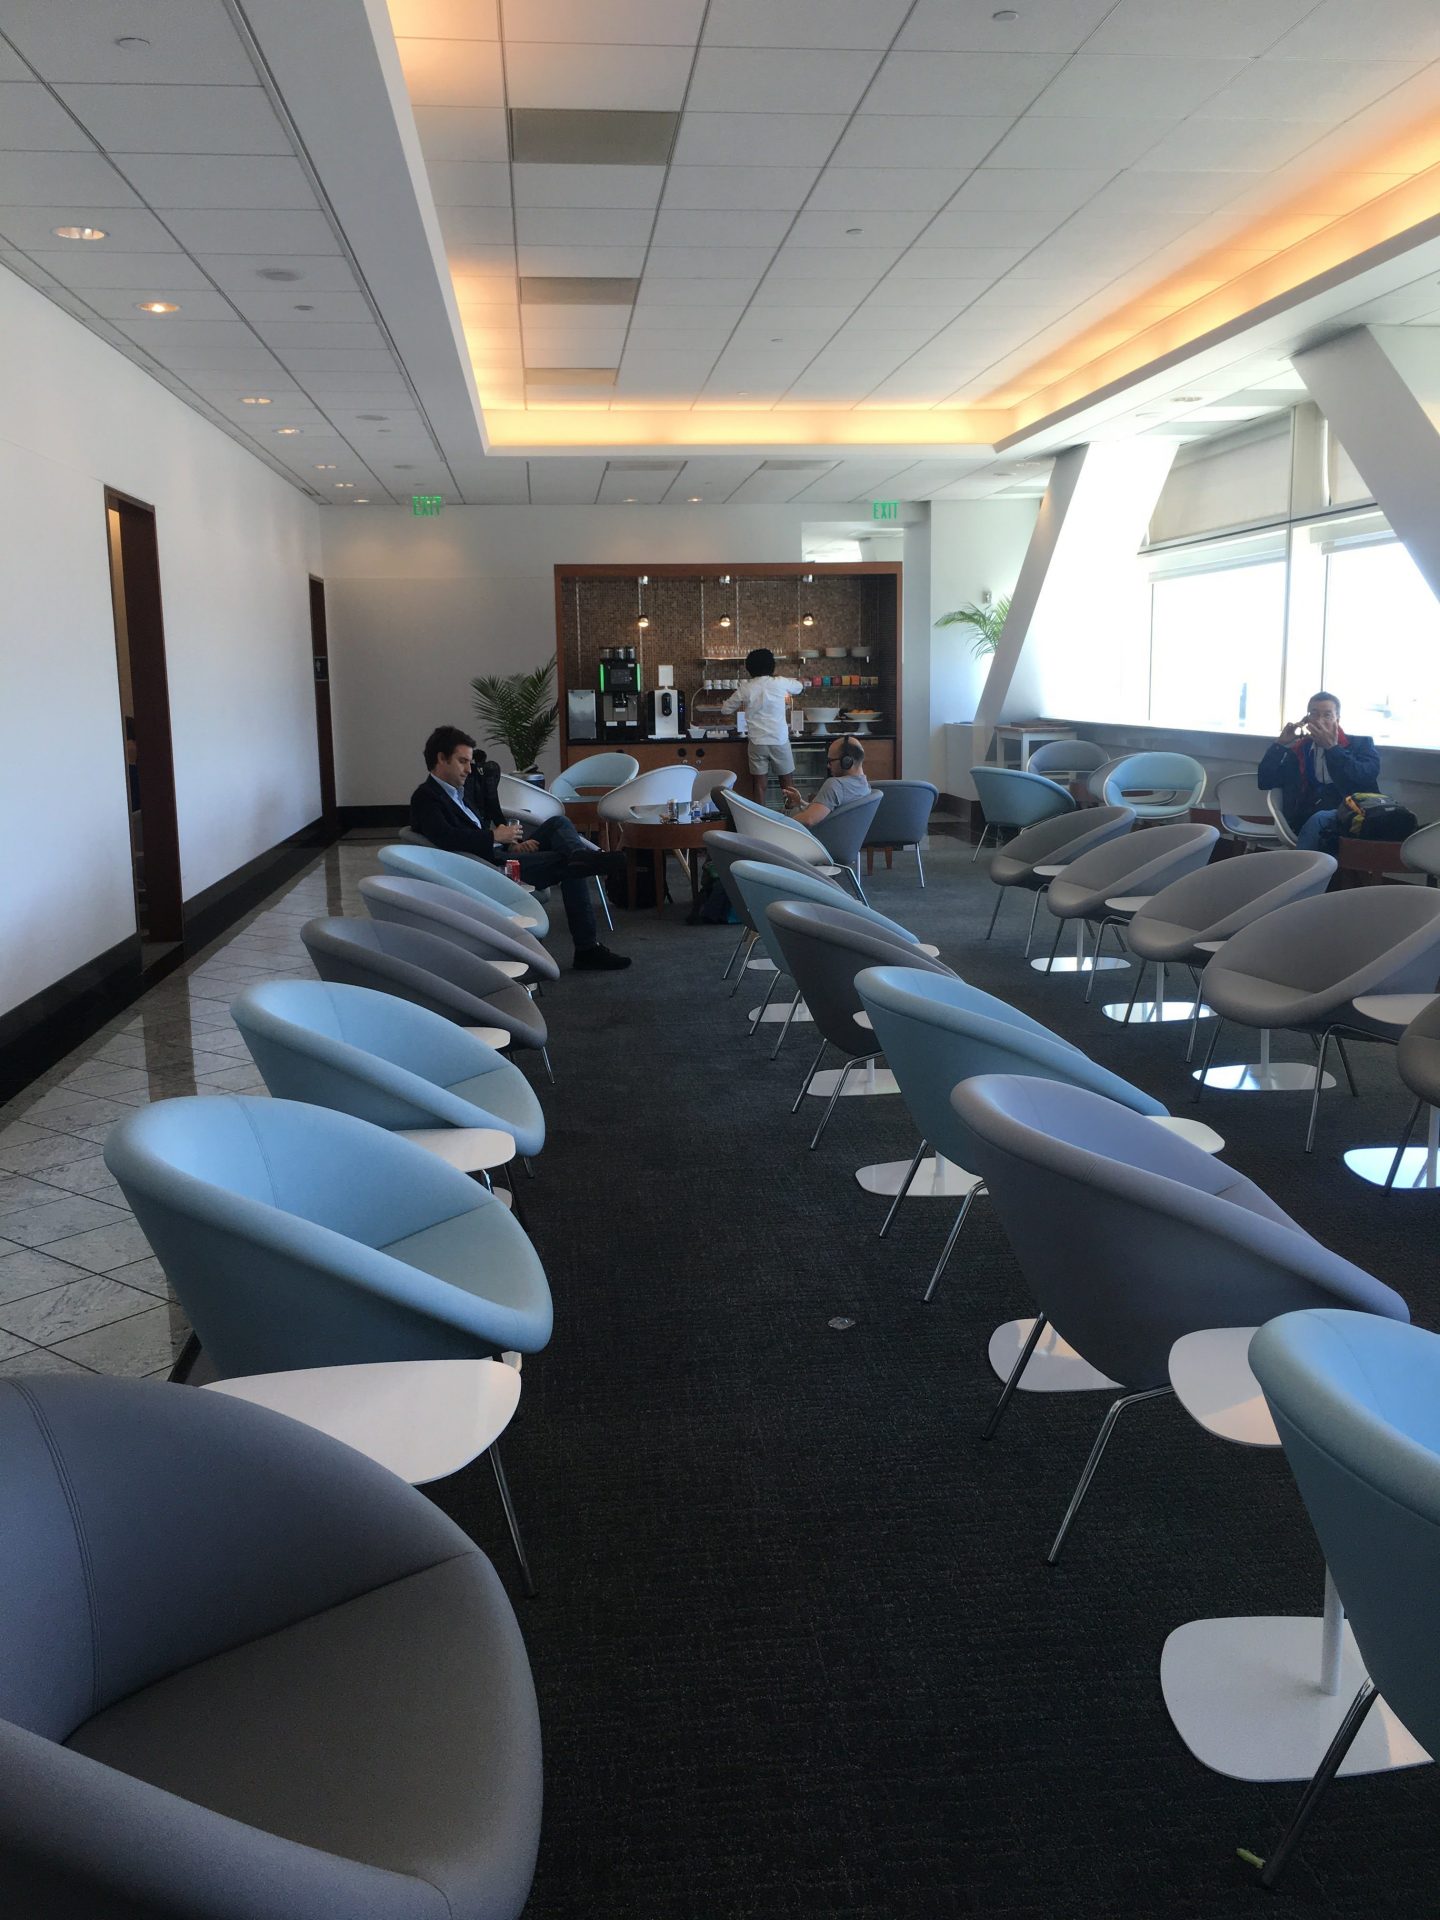 air france klm lounge sfo - Air France-KLM Lounge San Francisco SFO review